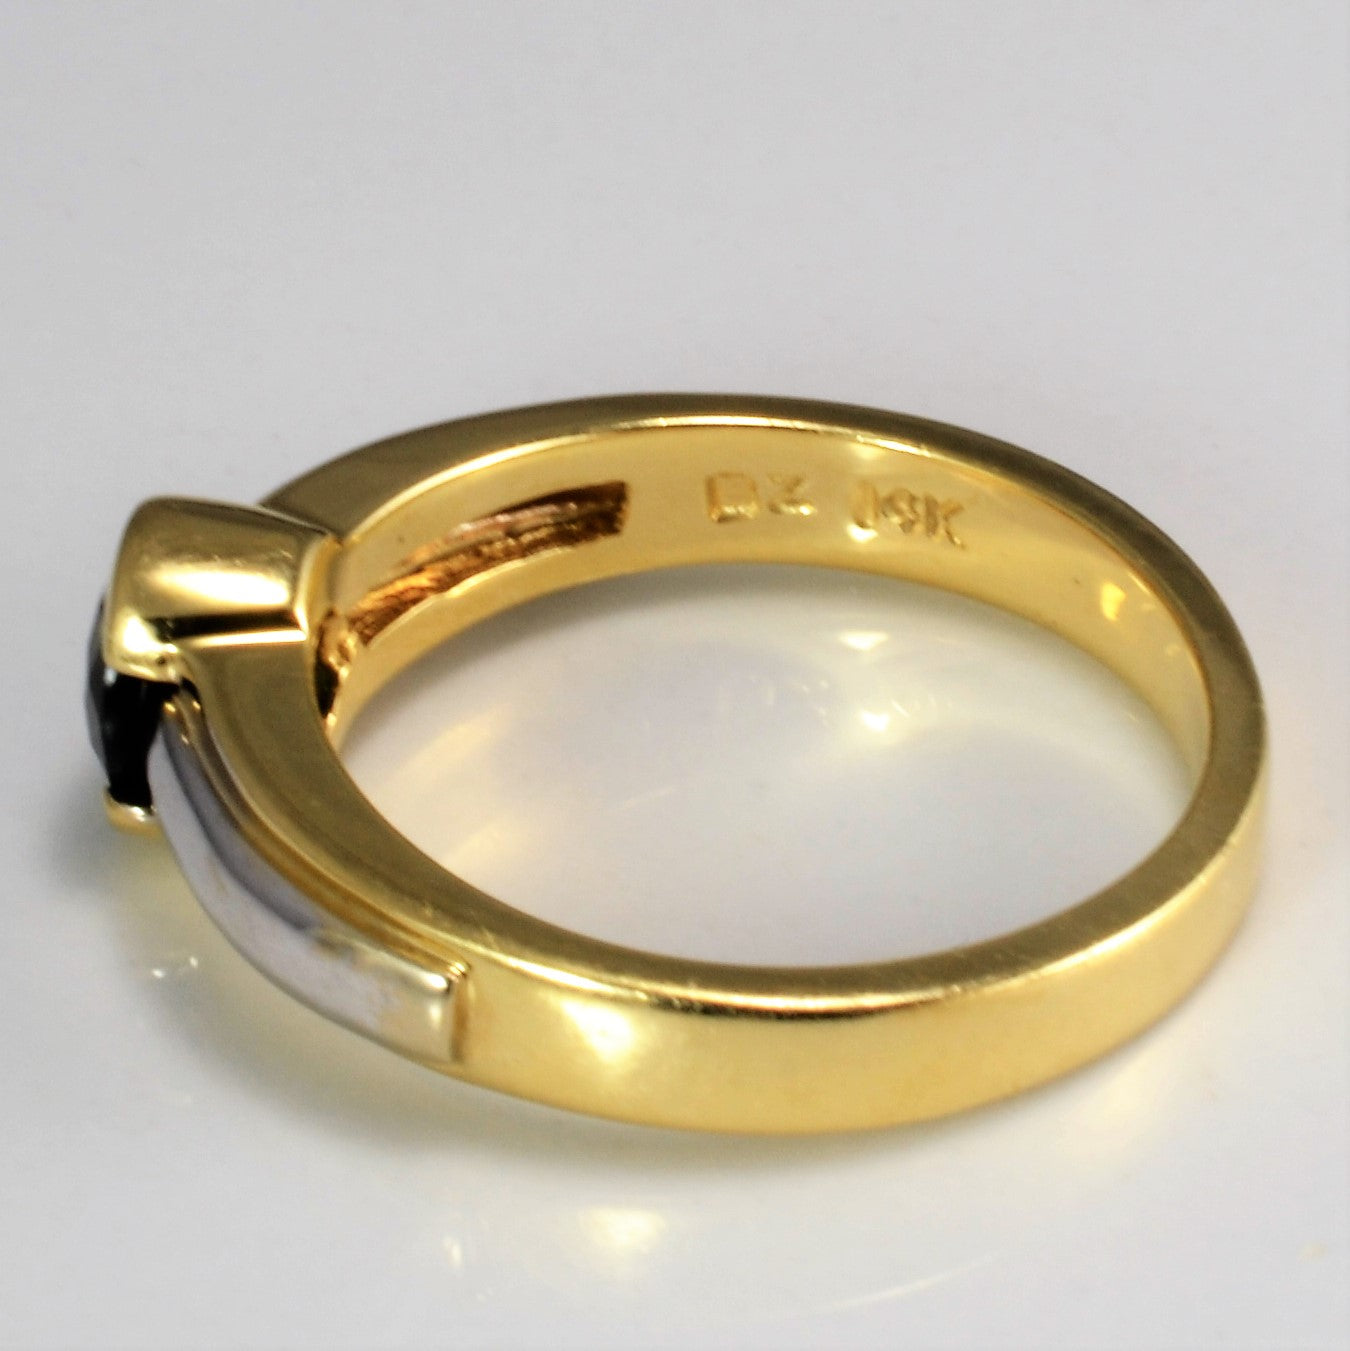 Semi Bezel Sapphire Ring | SZ 6.75 |